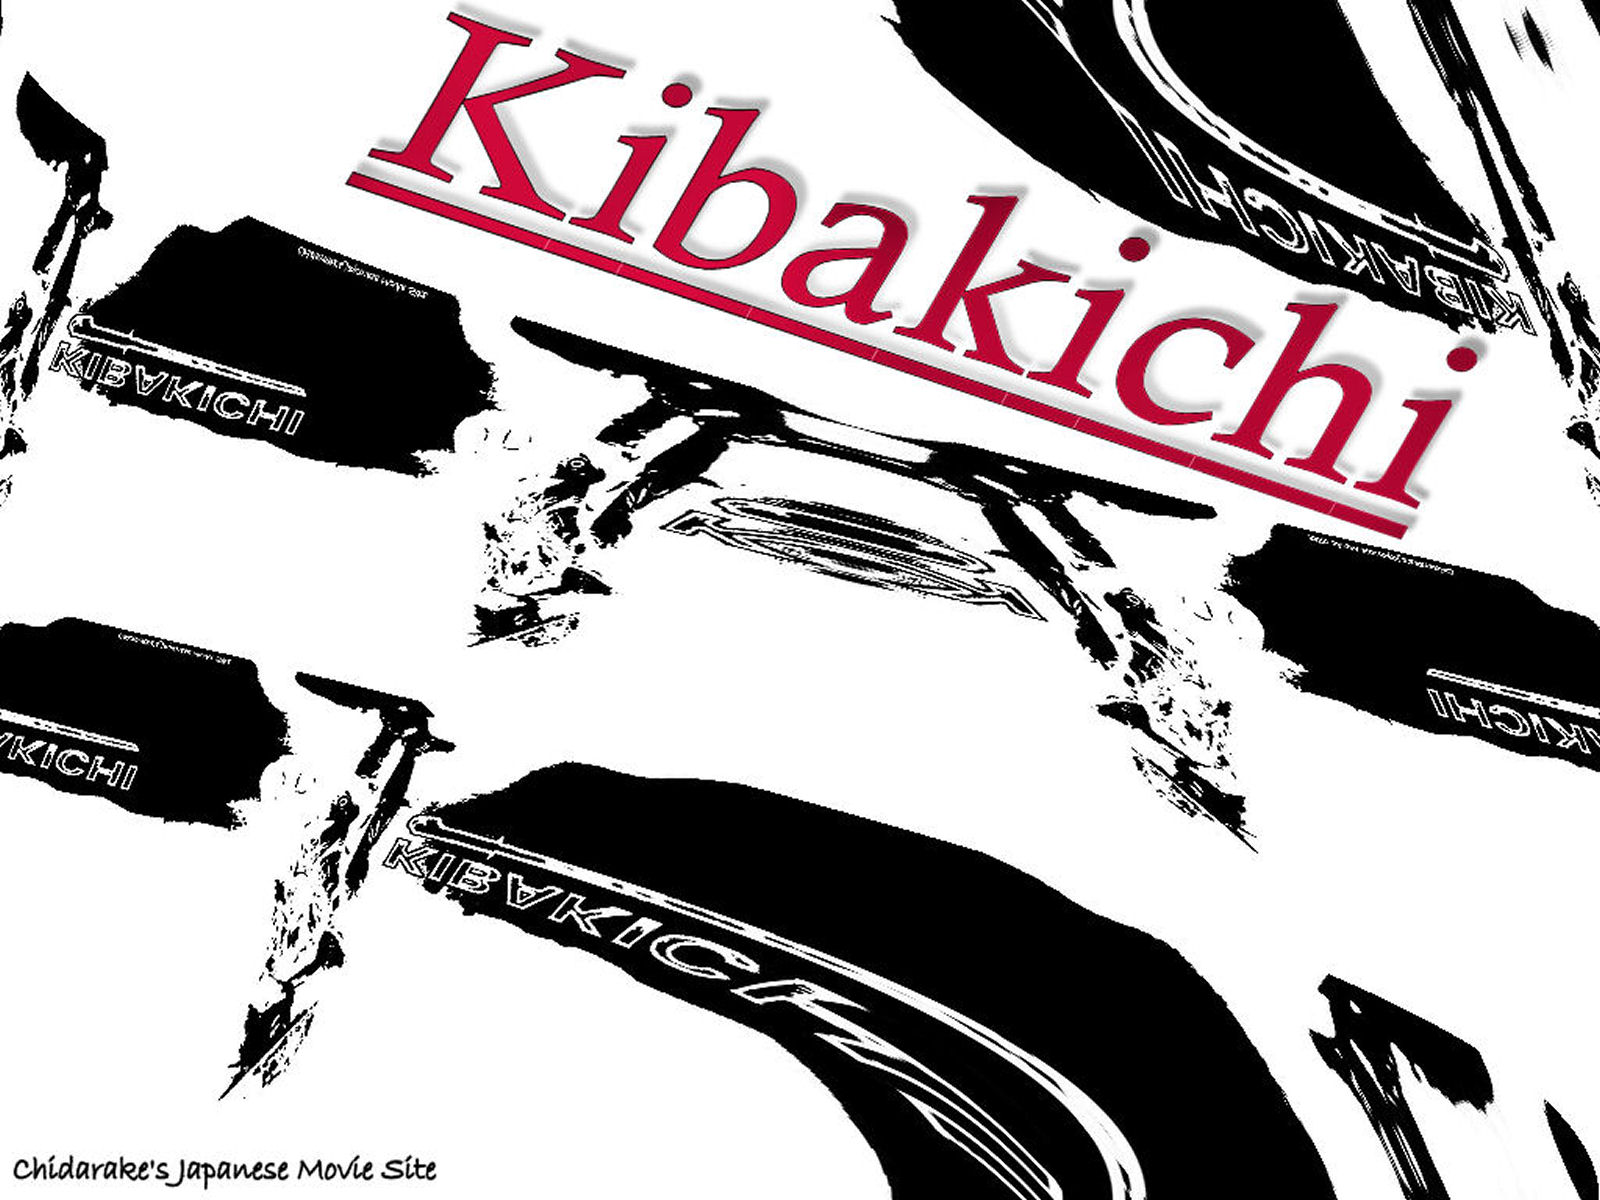 Download High quality Kibakichi wallpaper / Movies / 1600x1200